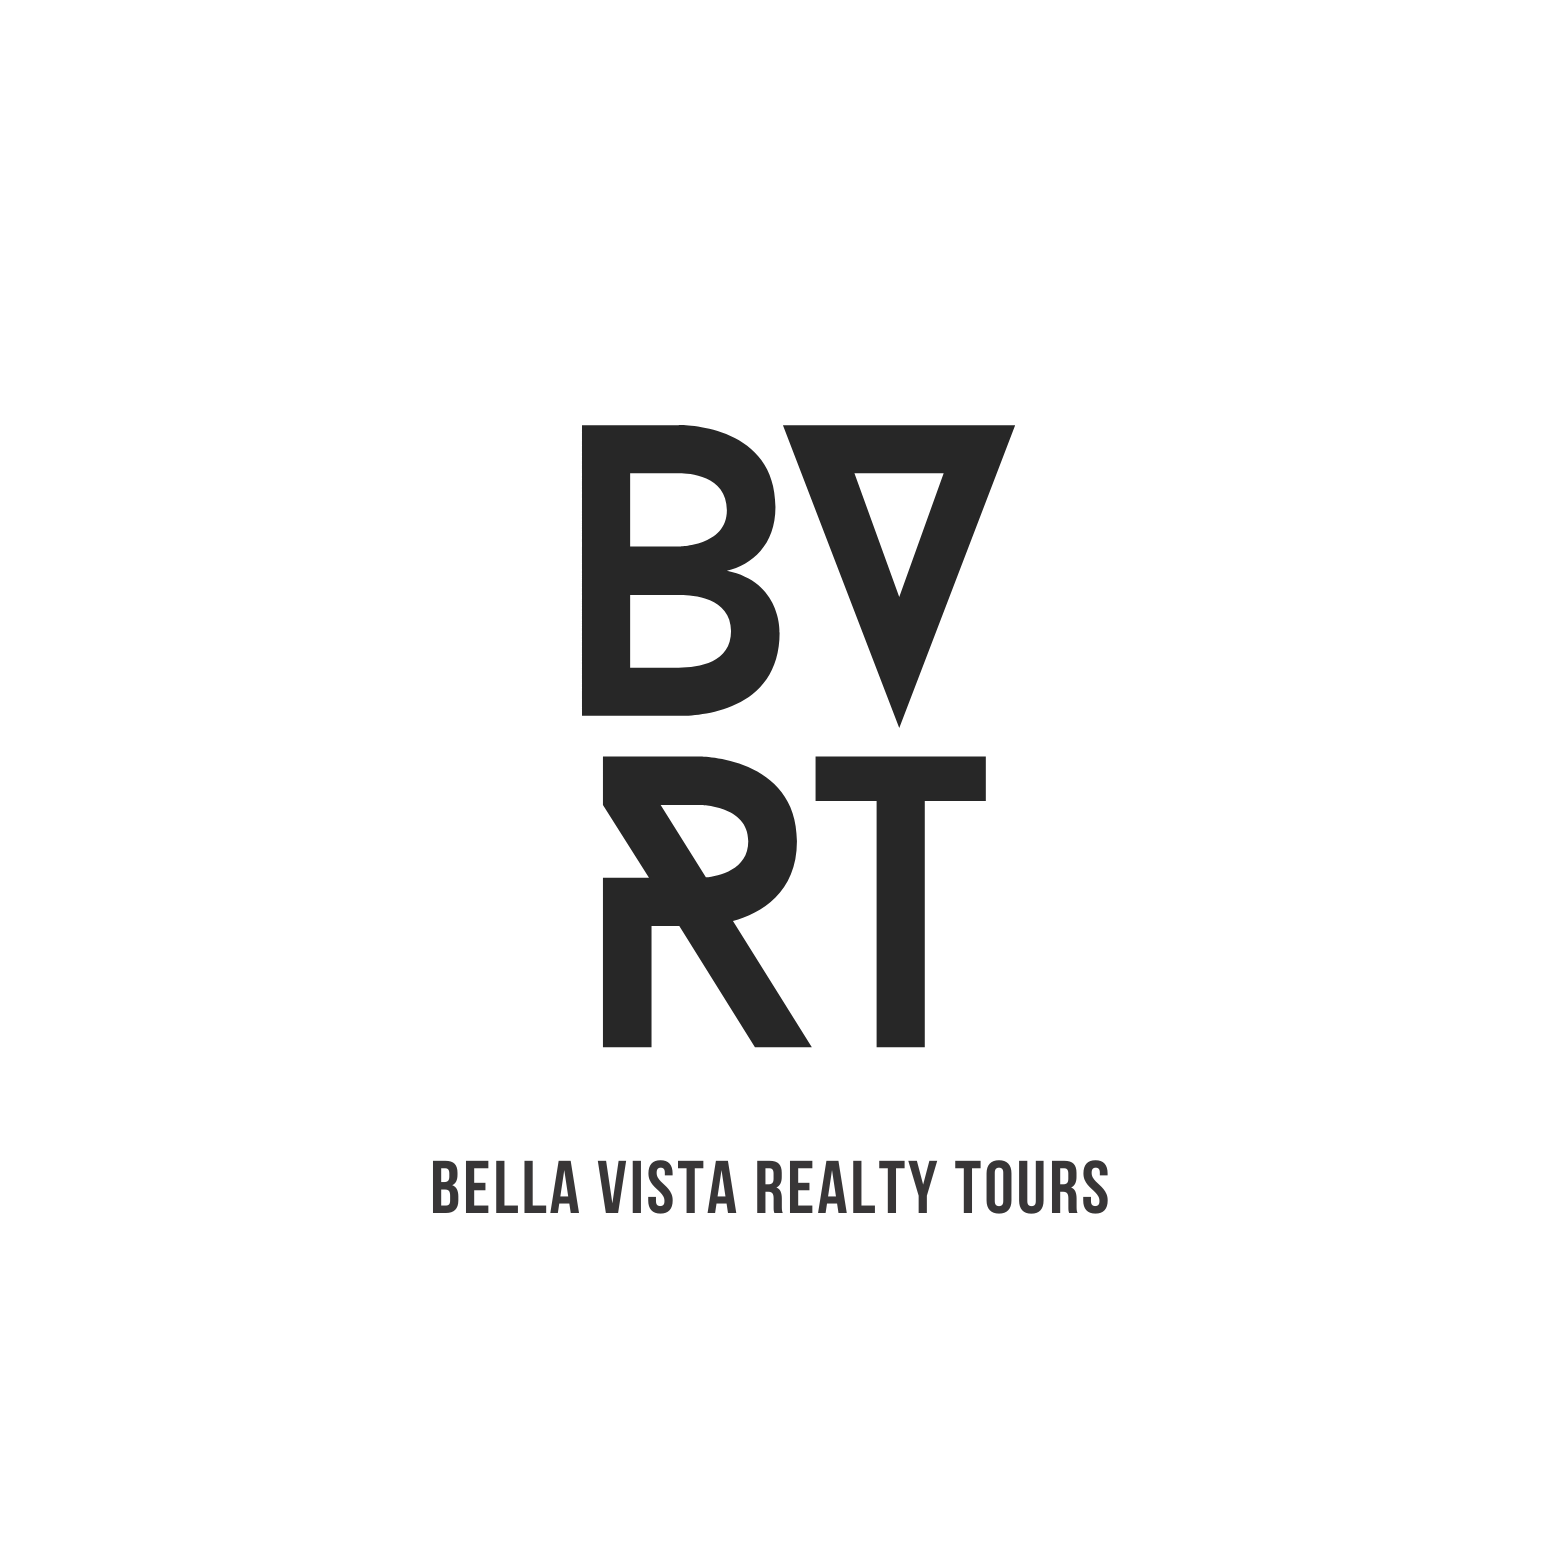 Bella Vista Realty Tours